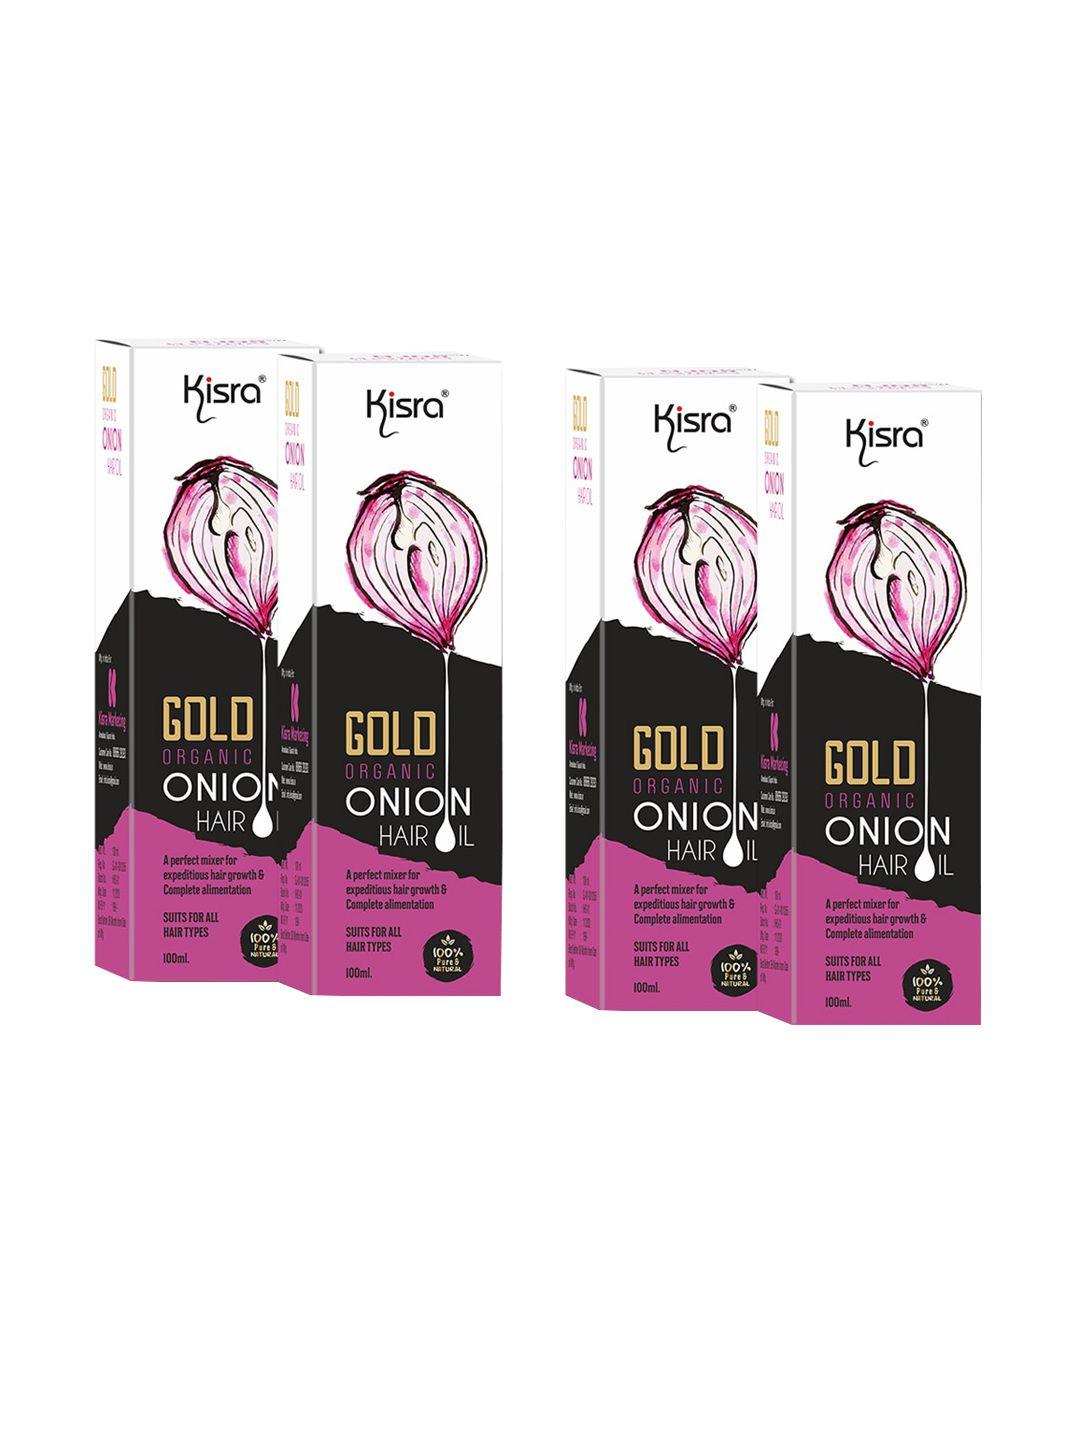 kisra set of 4 gold organic onion hair oil for hair growth & hairfall control - 100ml each